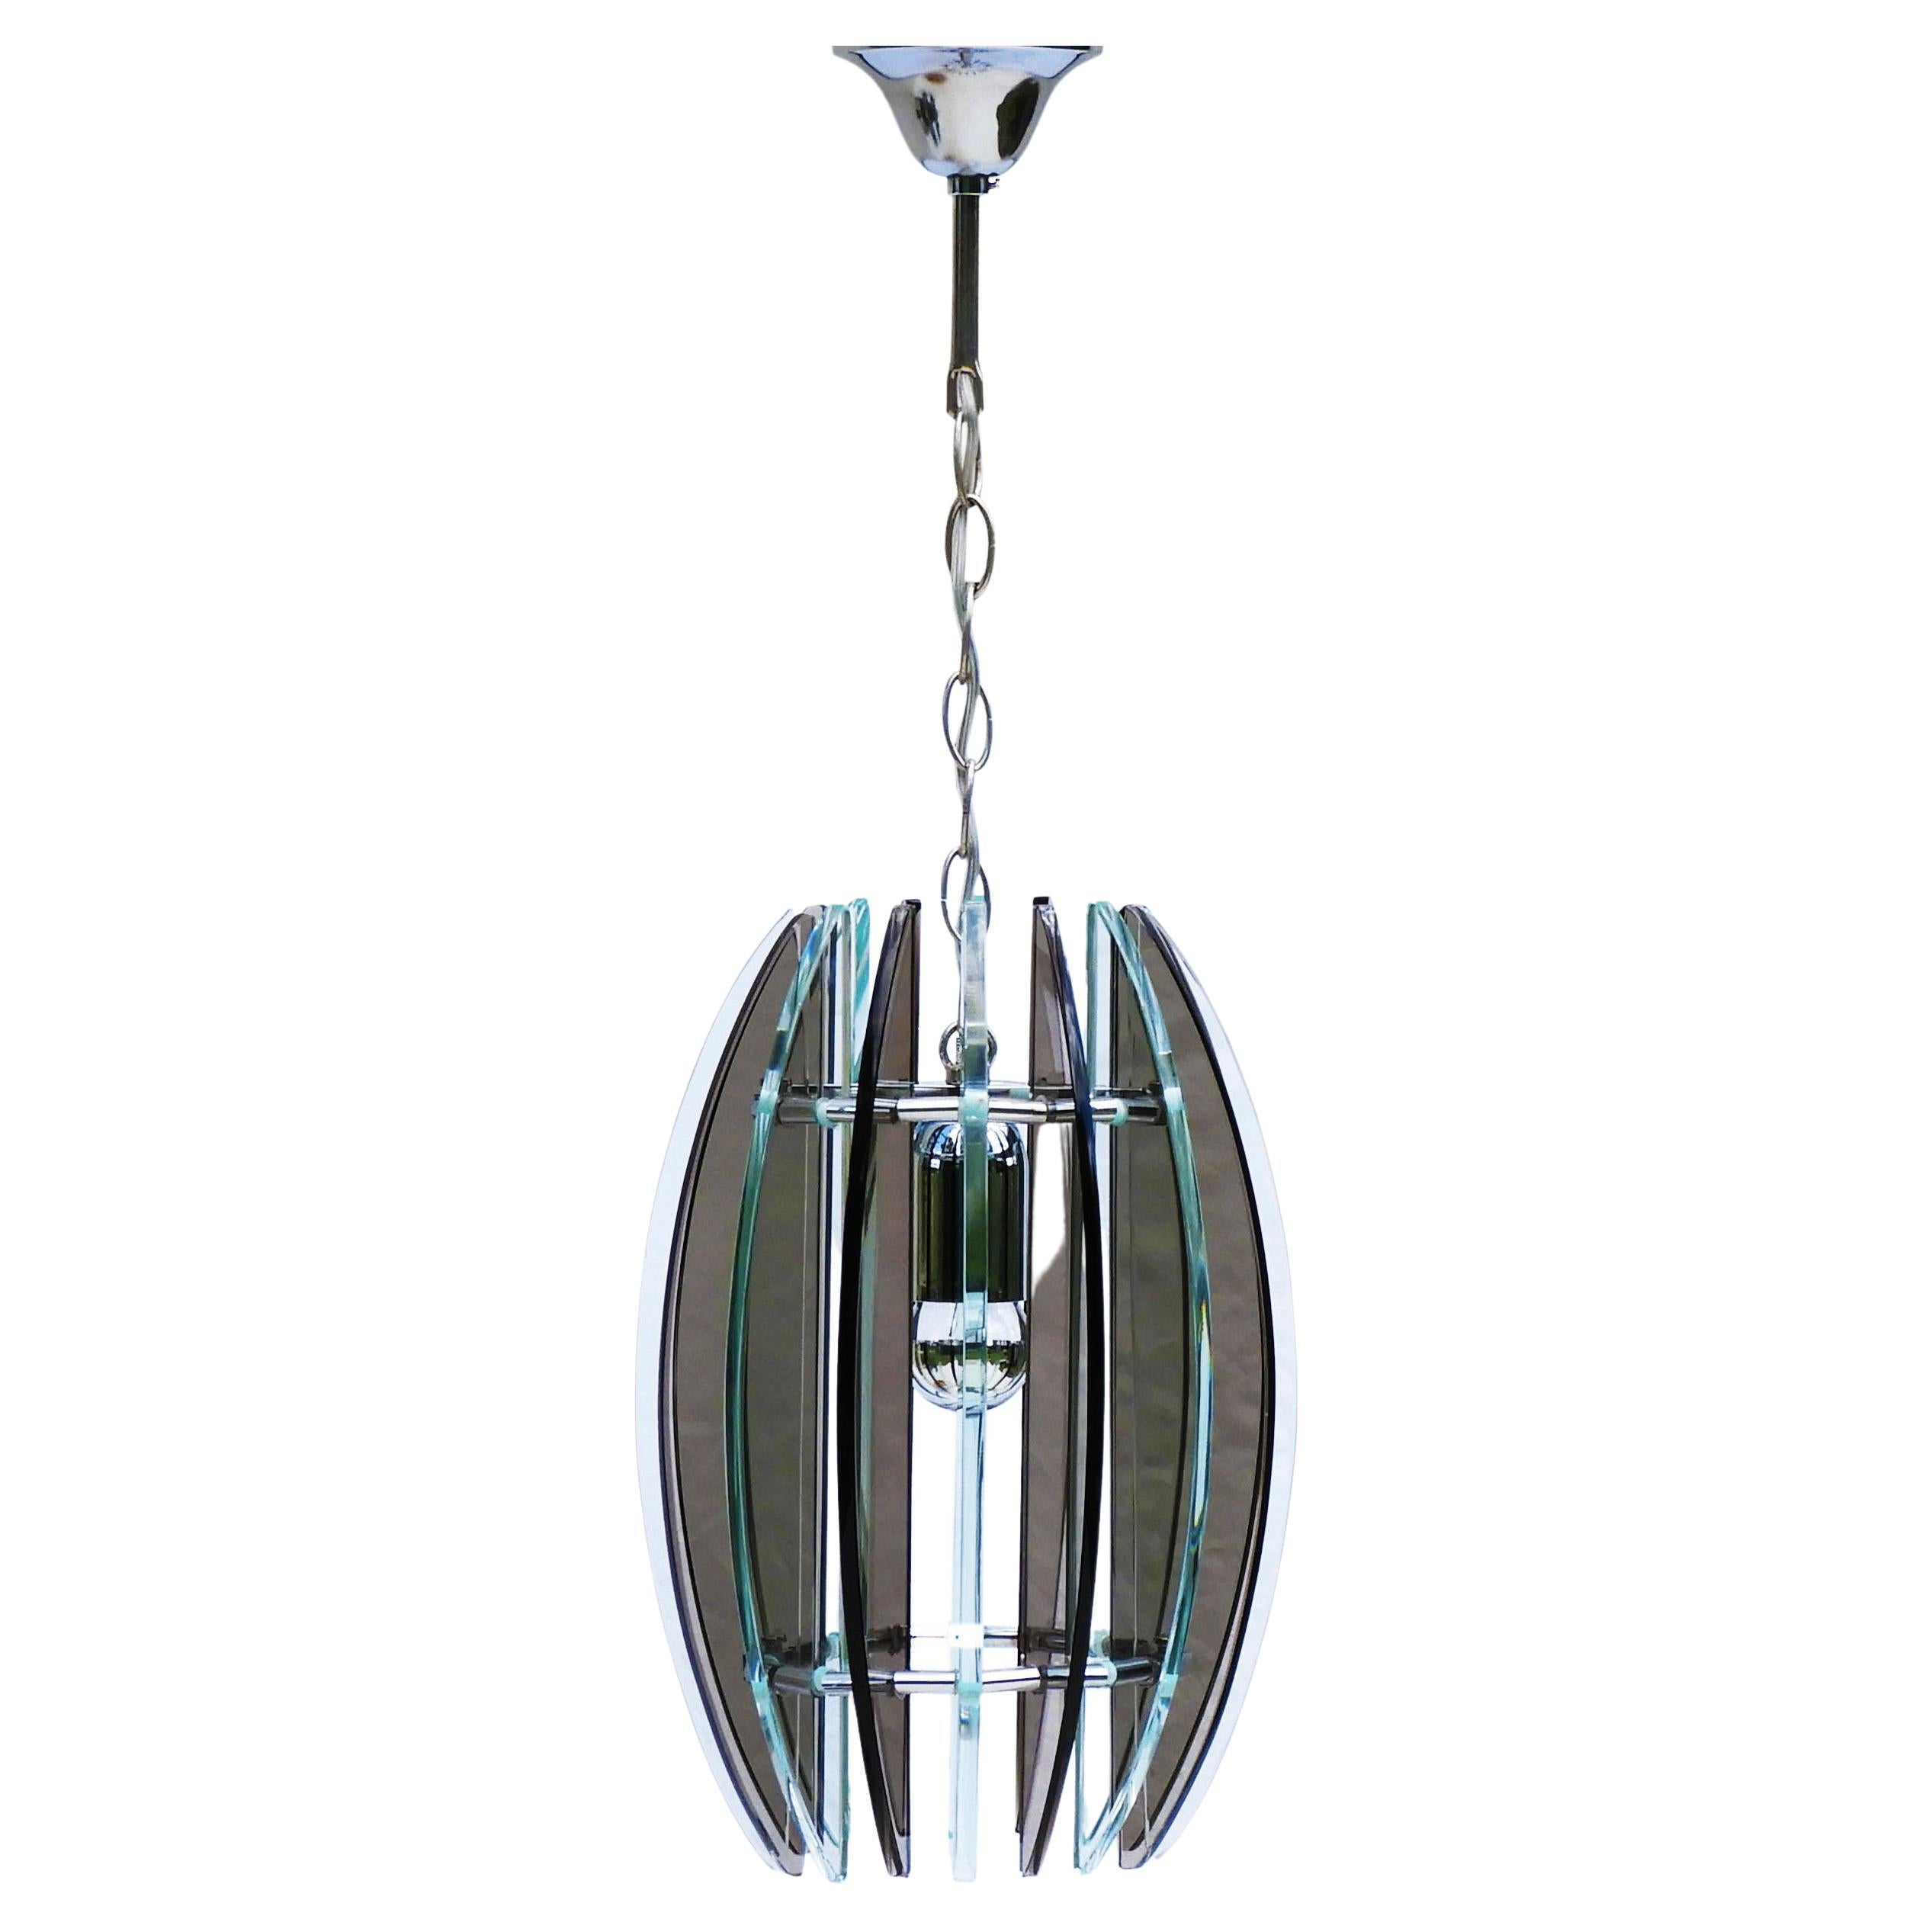 Mid-Century Modern Italian Mid Century Glass Pendant Light Fitting from Veca C1970  For Sale